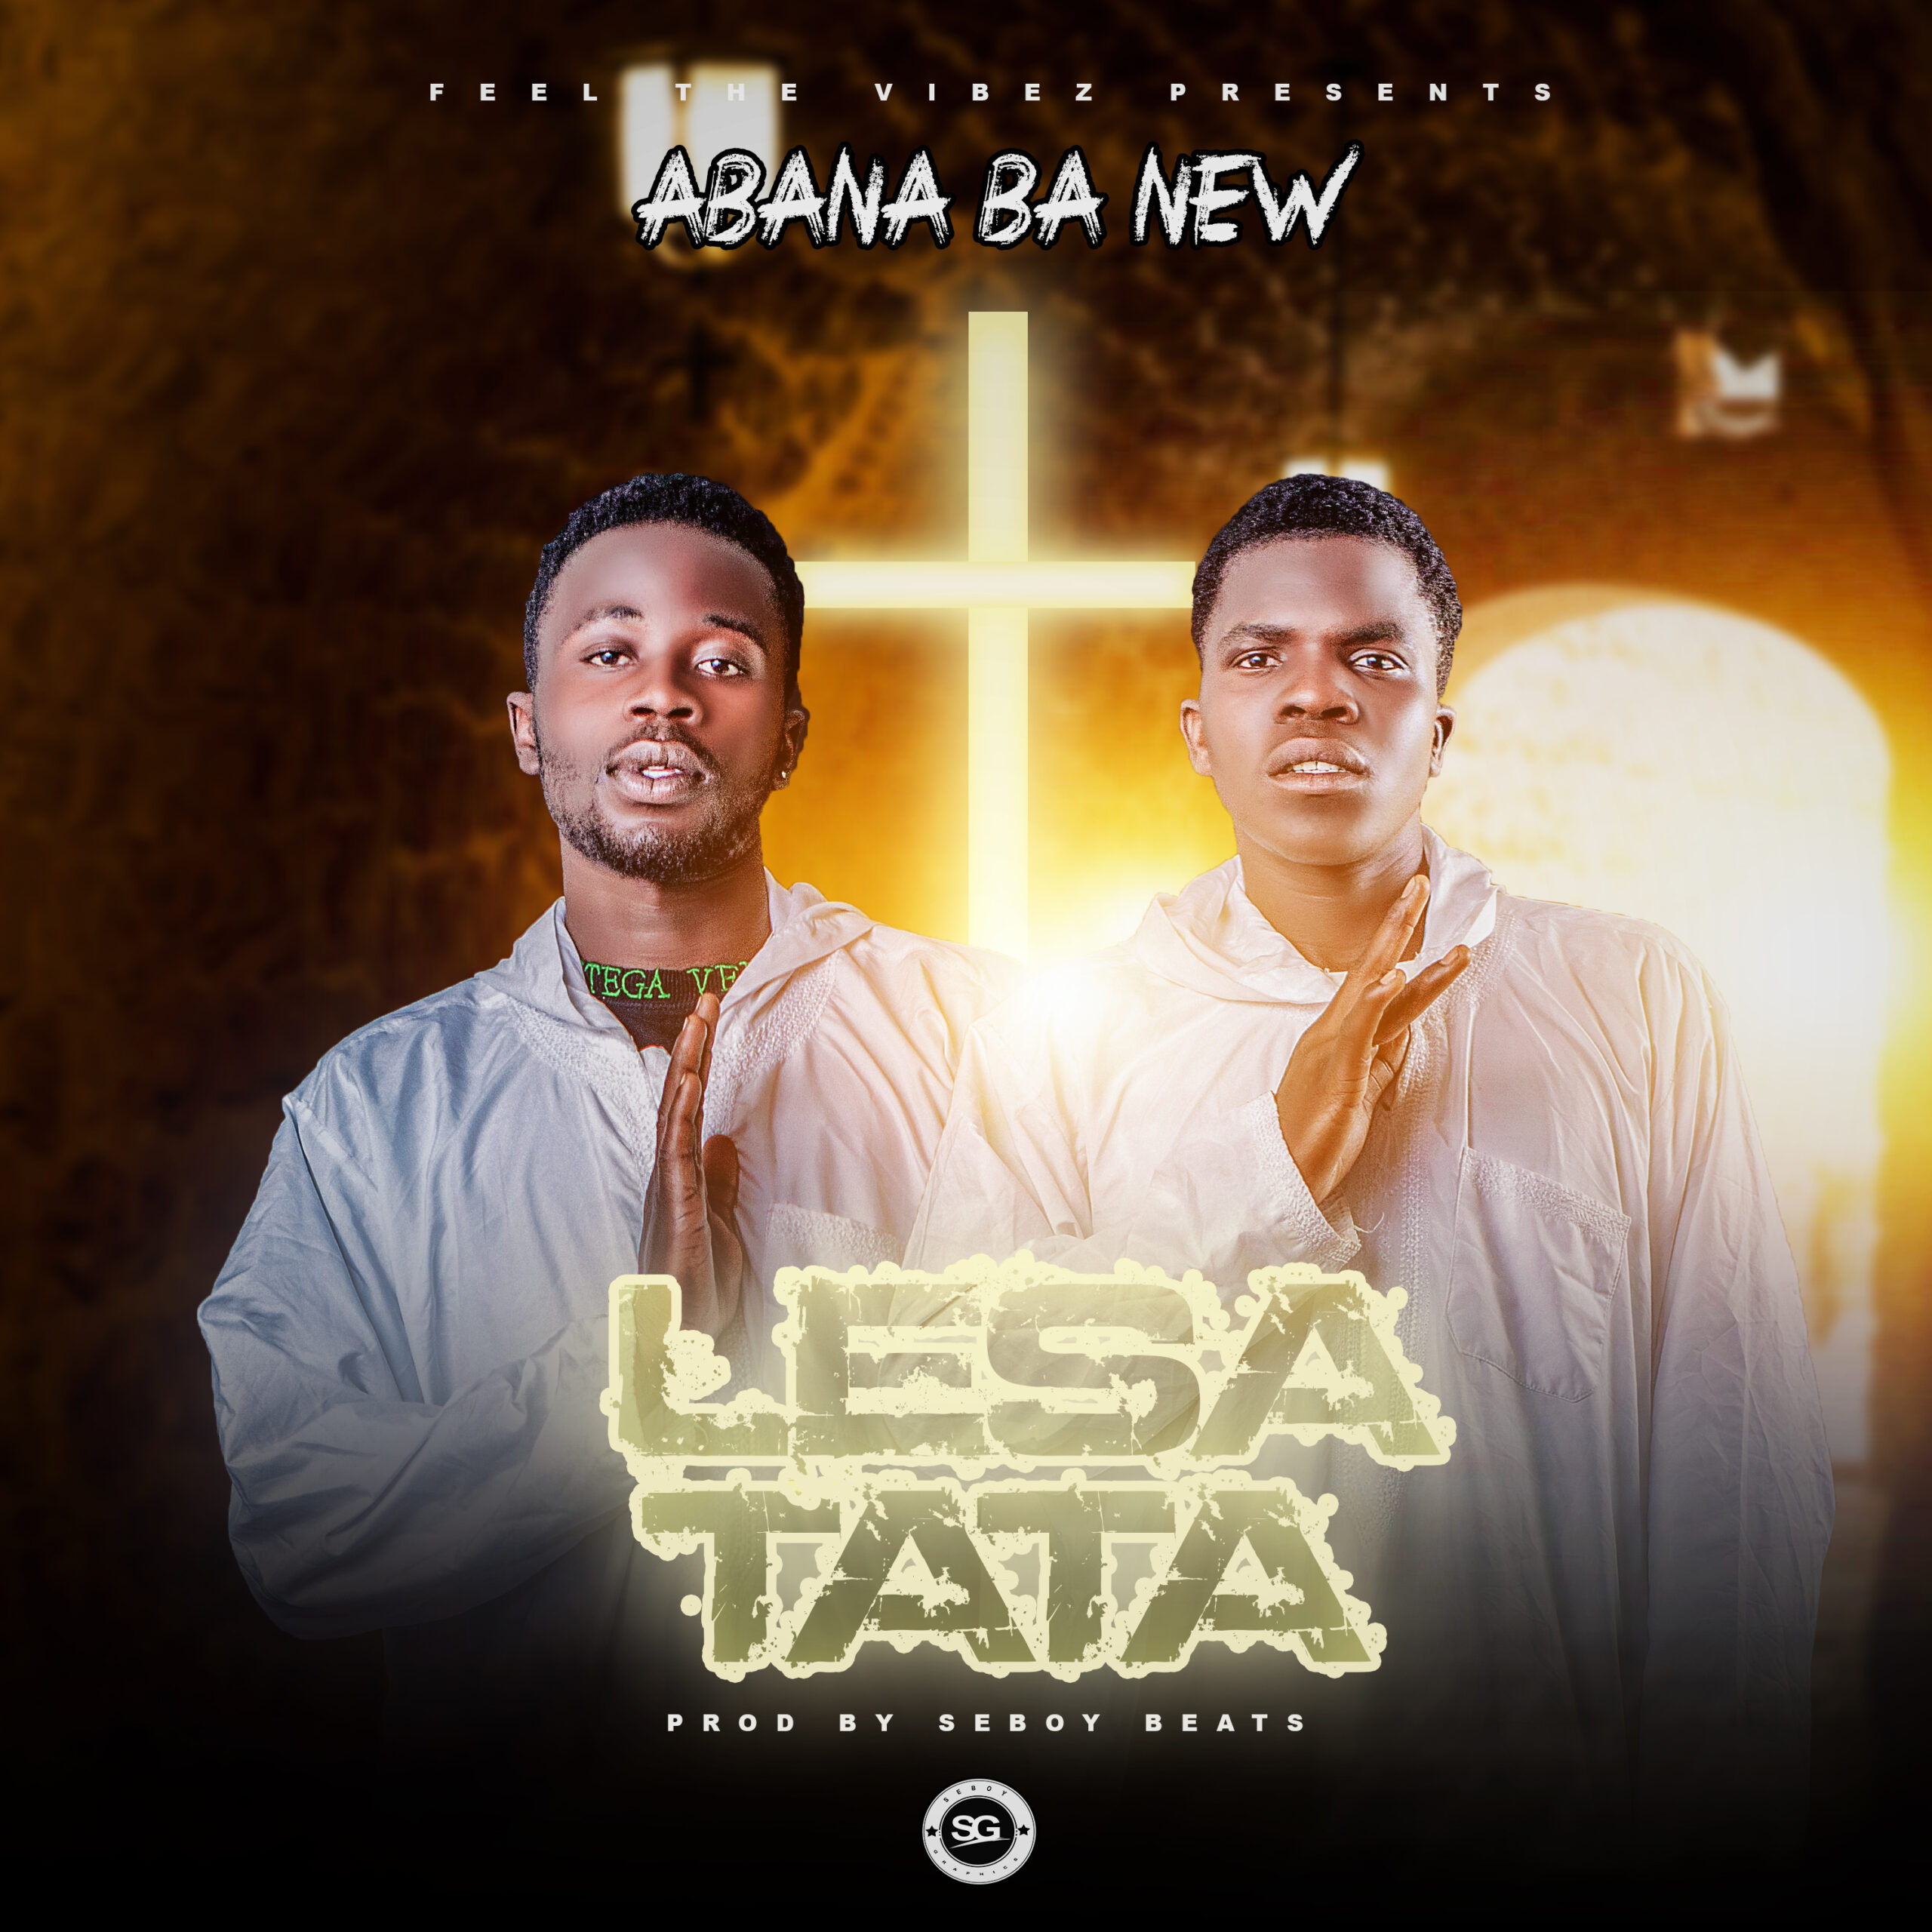 Abana New - Lesa Tata (Prod By Seboy)